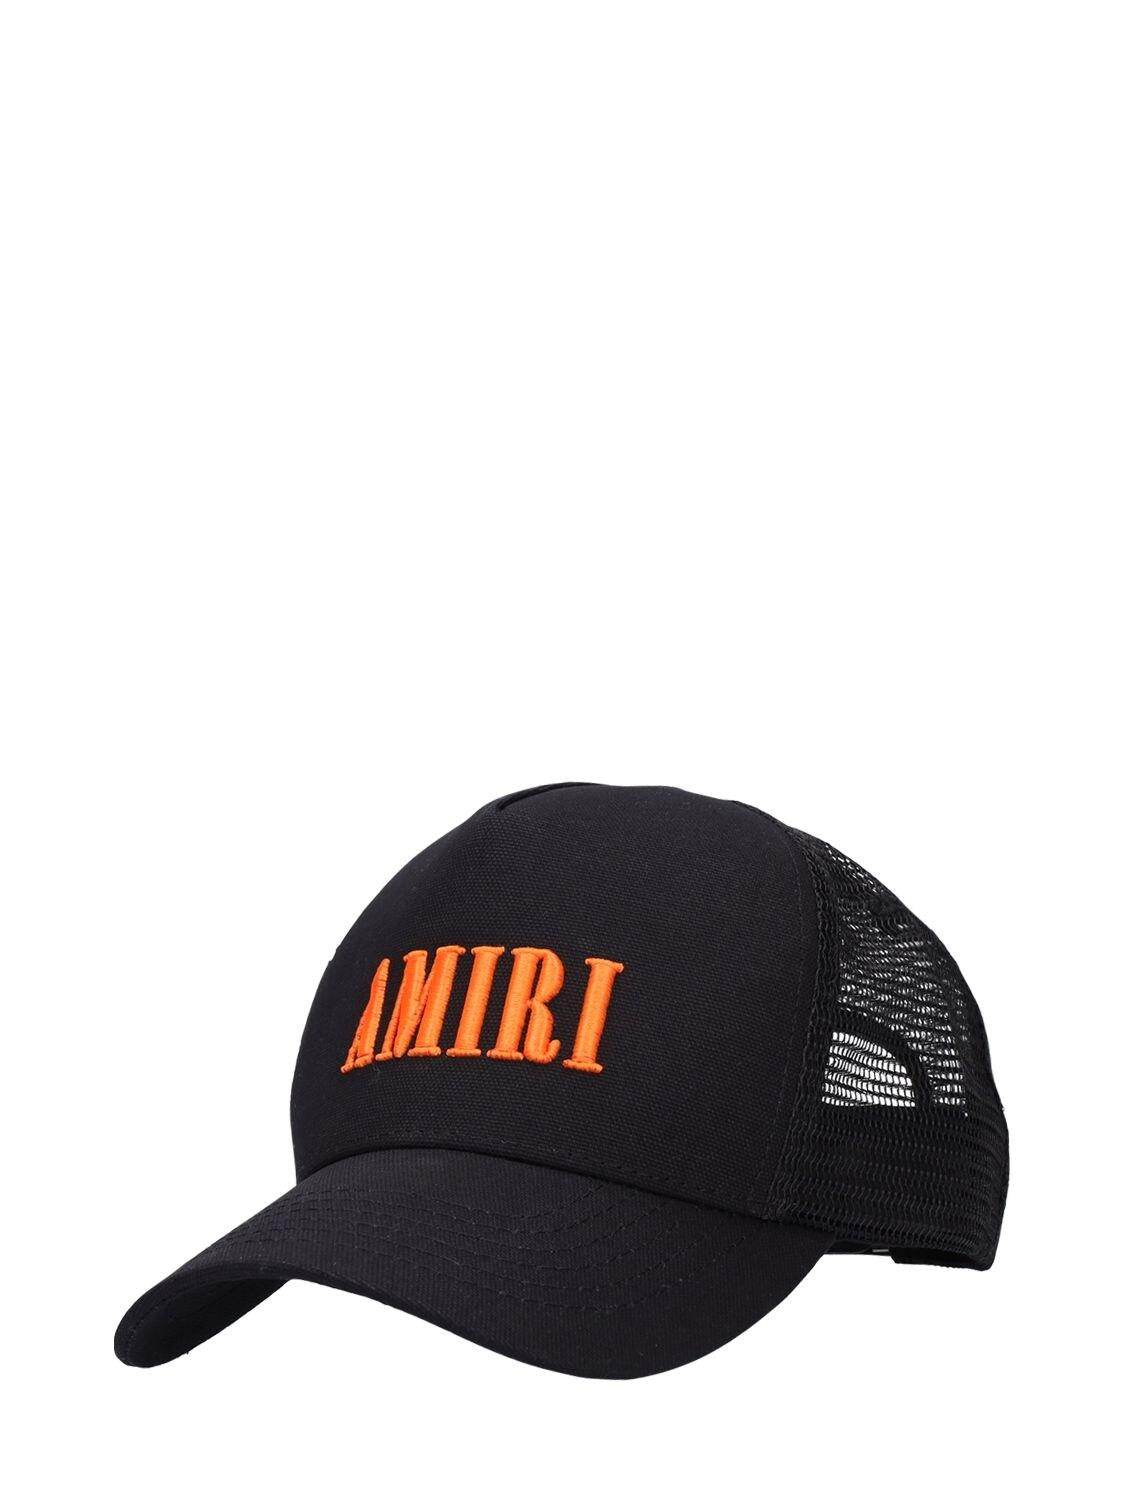 Amiri Core Logo Cotton Canvas Trucker Hat in Black/Orange (Black 